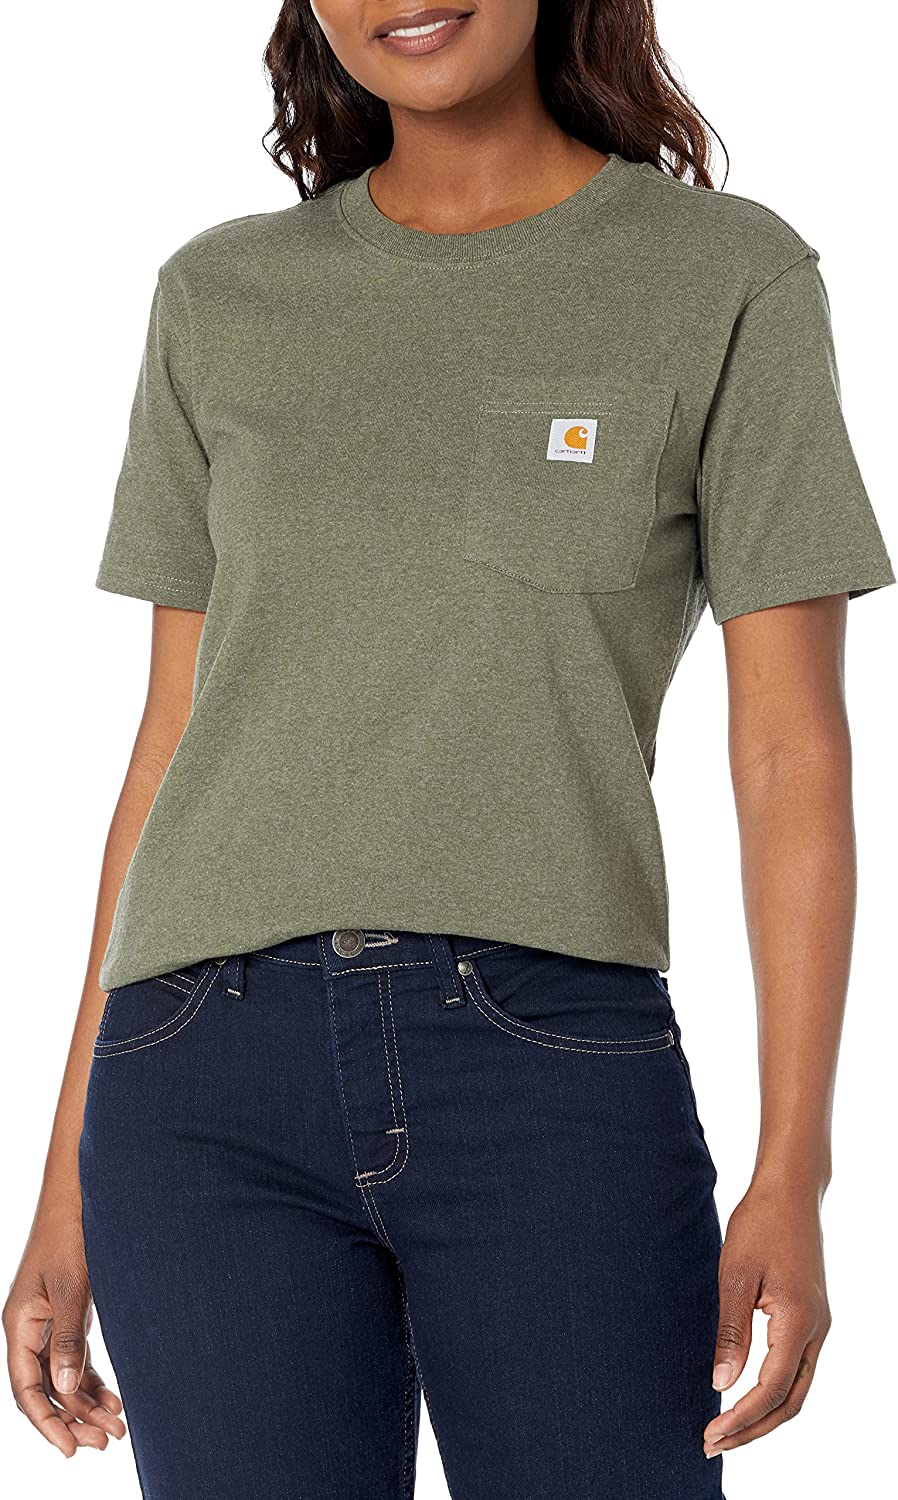 Women's Loose Fit Heavyweight Short-Sleeve Pocket T-Shirt (Regular and Plus Sizes)